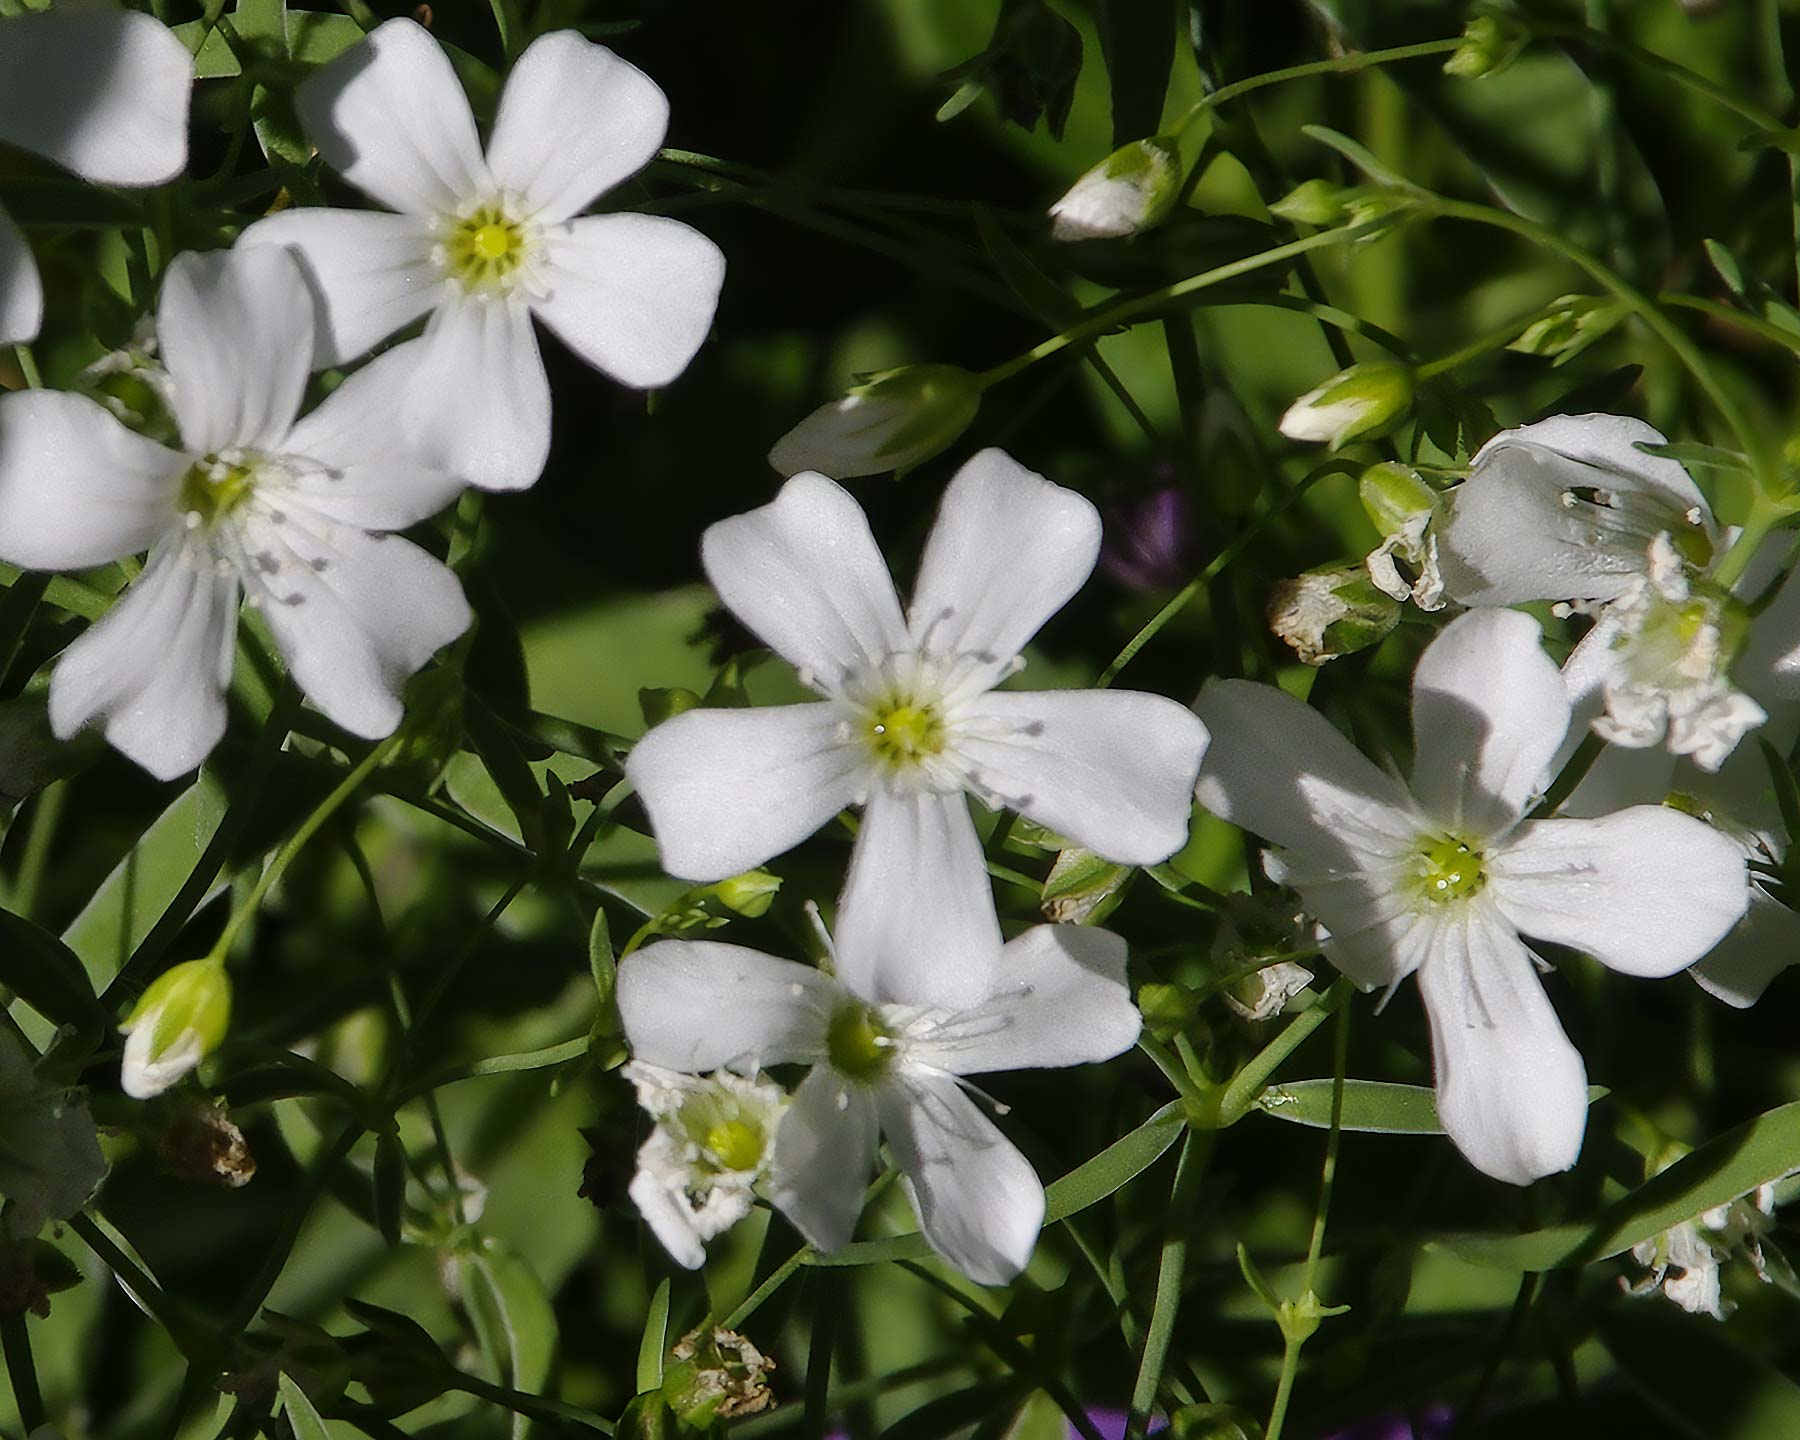 Gypsophila 'Monarch White' - Baby's Breath delicate white flowers